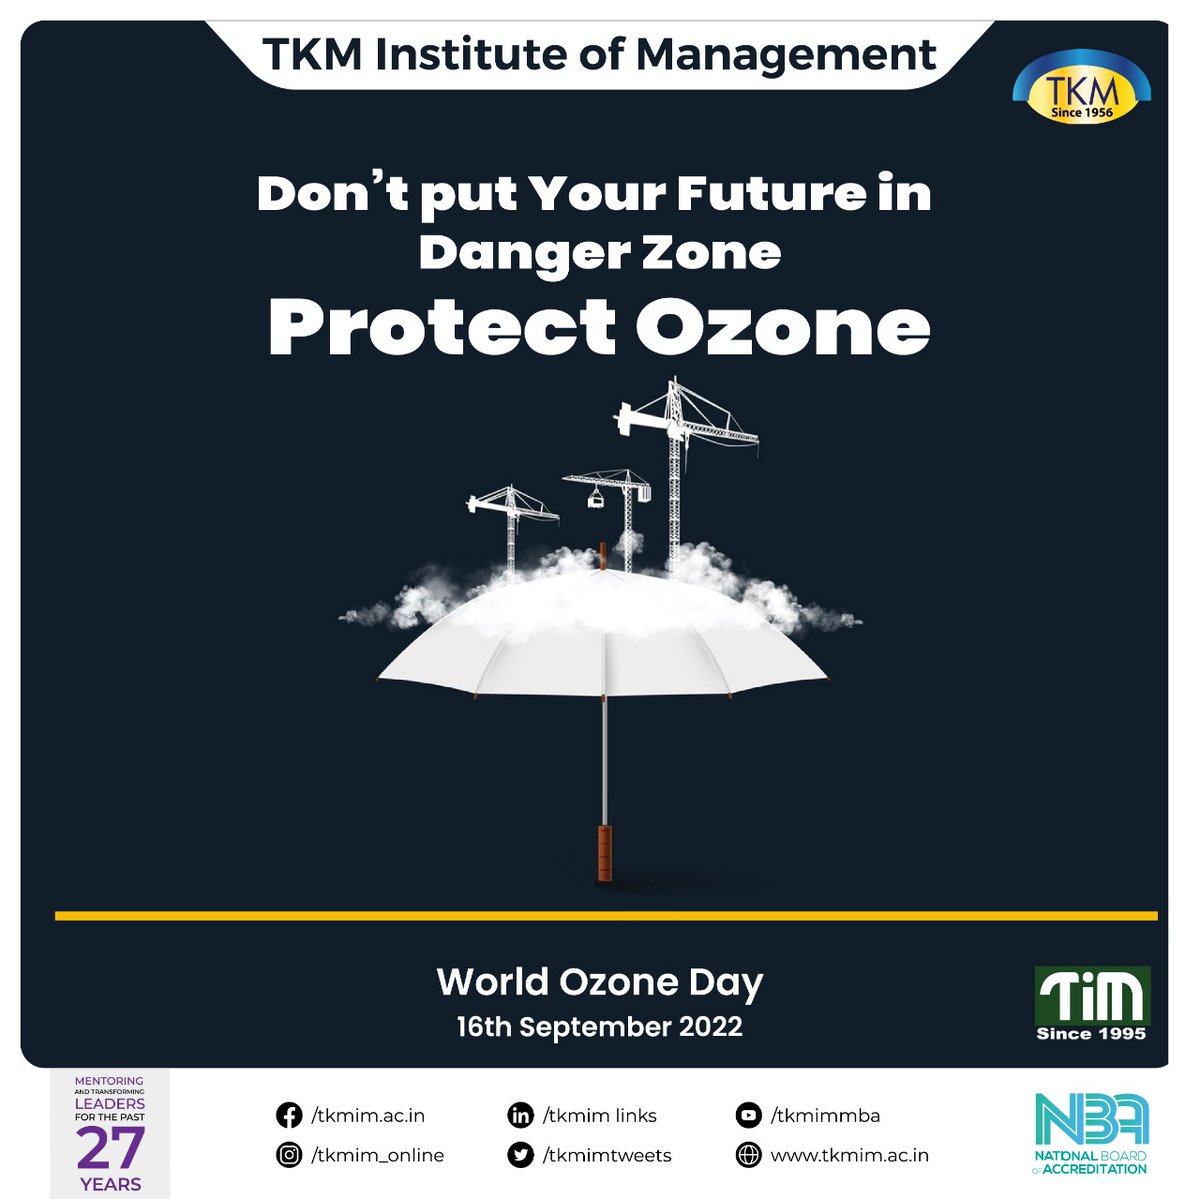 Let's take an oath to protect the ozone and save the future on this #worldozonelayer
#ozoneday #worldozoneday #ozone #saveearth #globalwarming #climatechange #ozonedepletion #protectozone #saveozonelayer #environment #saveozone #tkmimkollam #tim #tkm #tkminstituteofmanagement